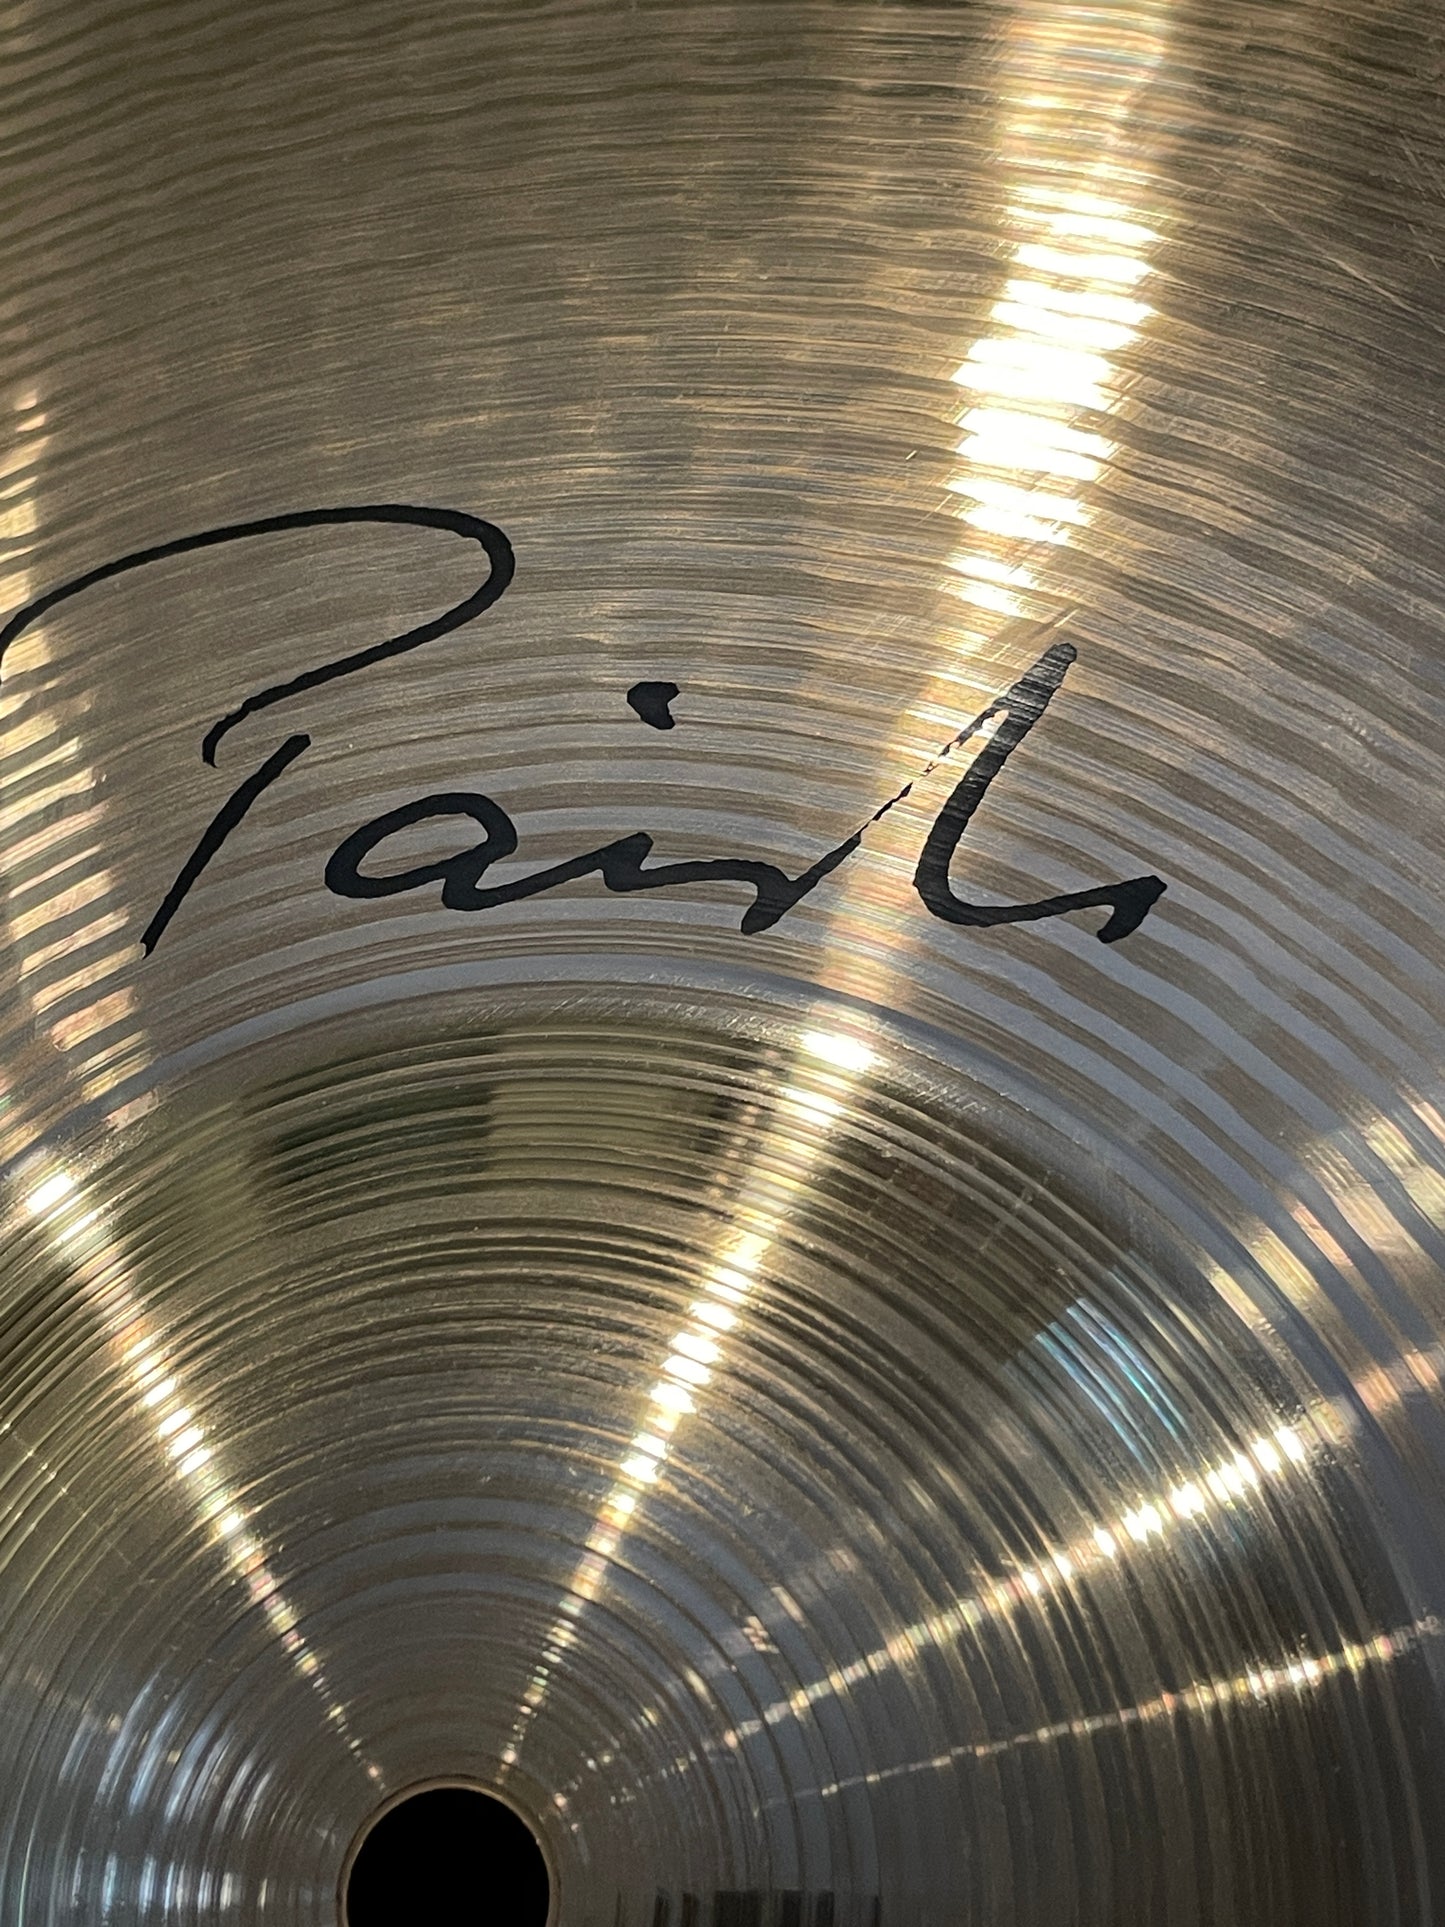 18" Paiste Signature Full Crash Cymbal 1460g